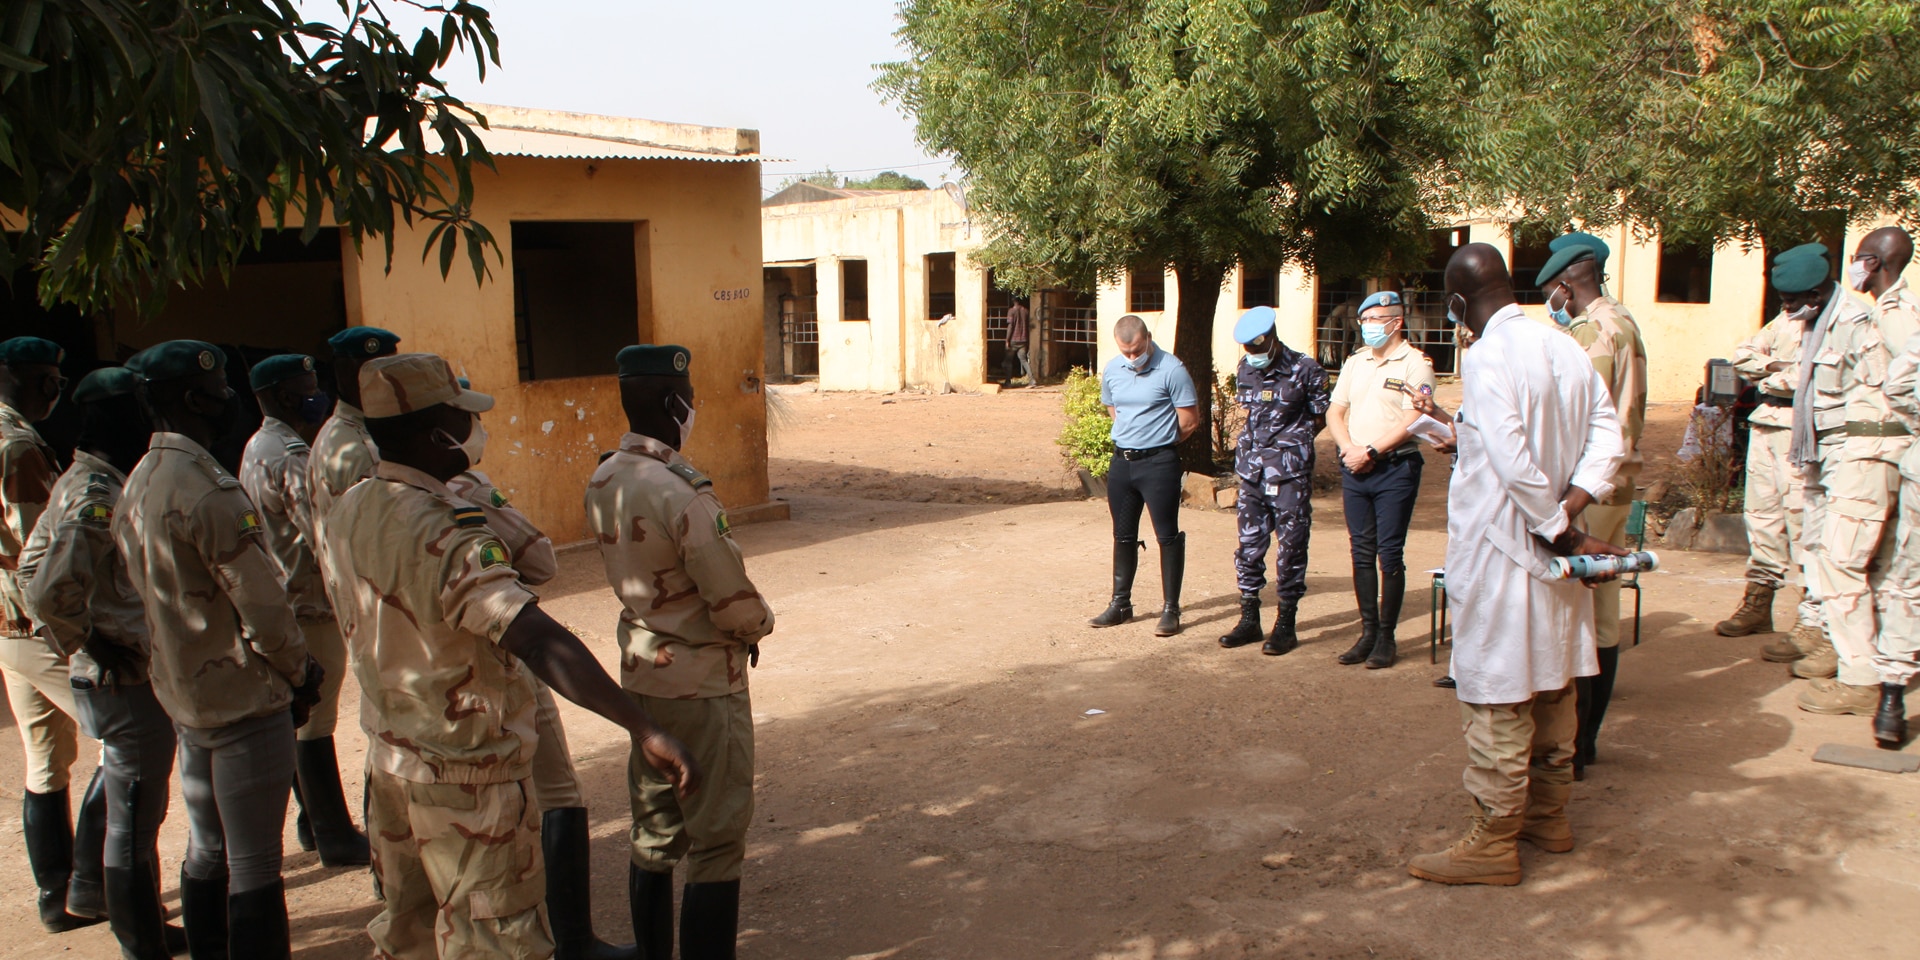 Carl Emery, accompanied by a Malian gendarmerie commander in costume, stands in front of nine uniformed officers.